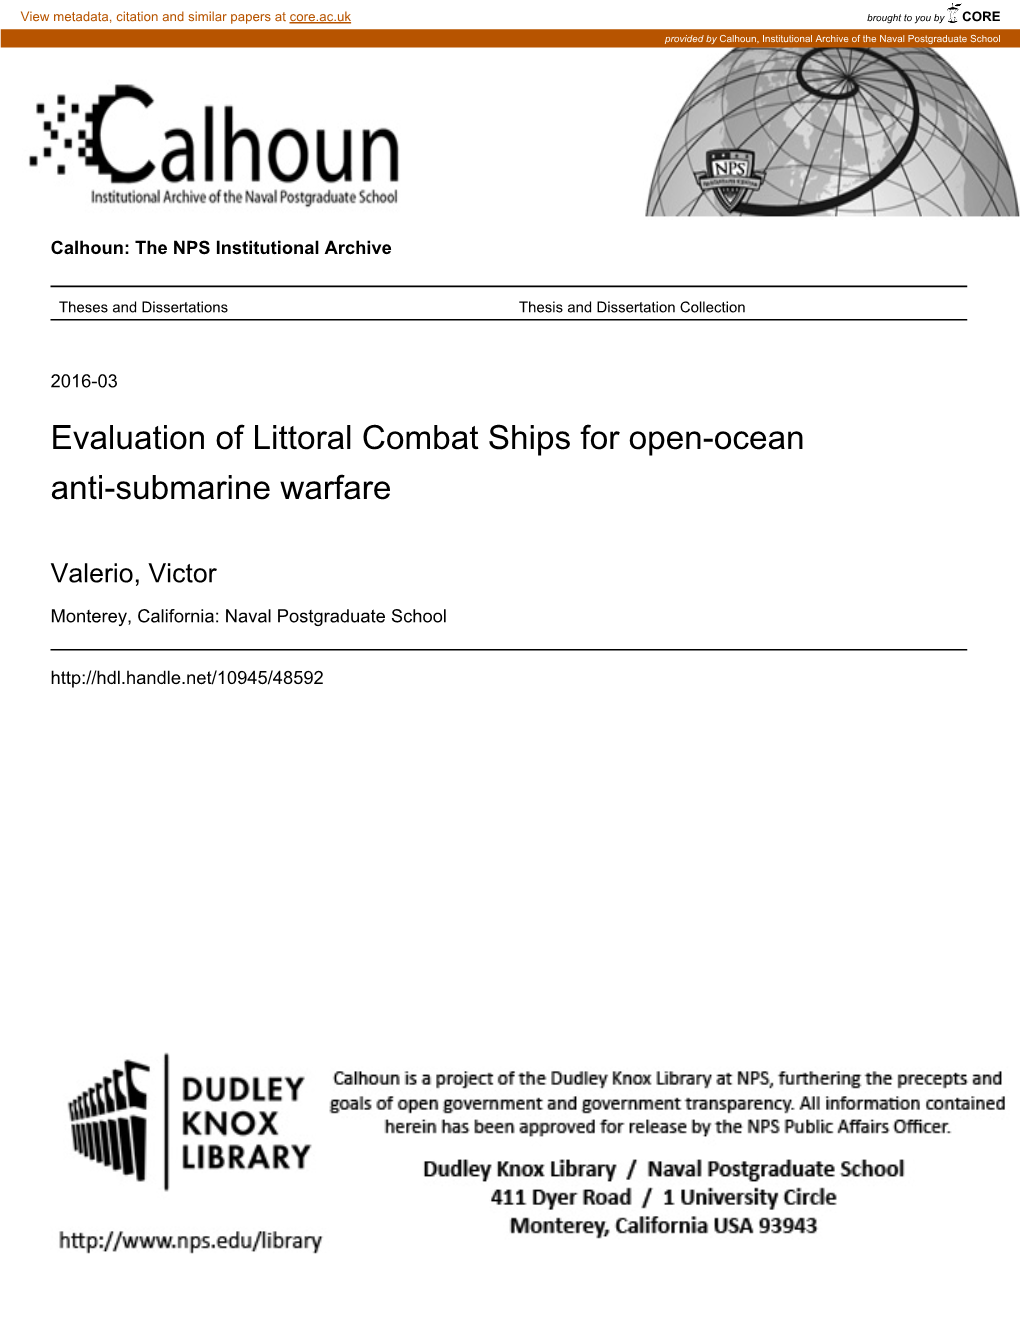 Evaluation of Littoral Combat Ships for Open-Ocean Anti-Submarine Warfare